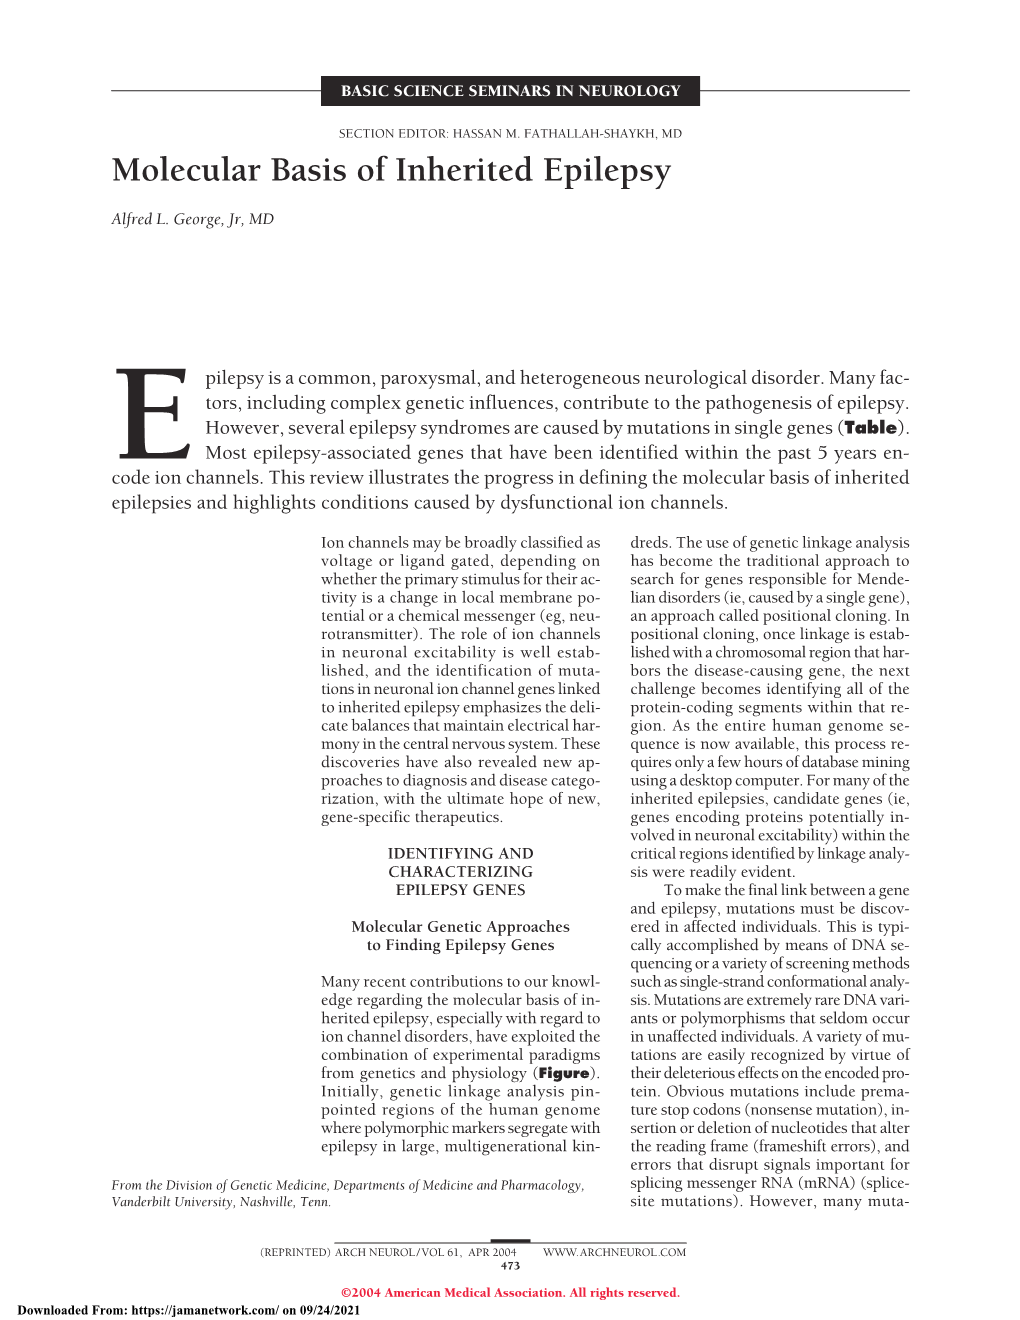 Molecular Basis of Inherited Epilepsy